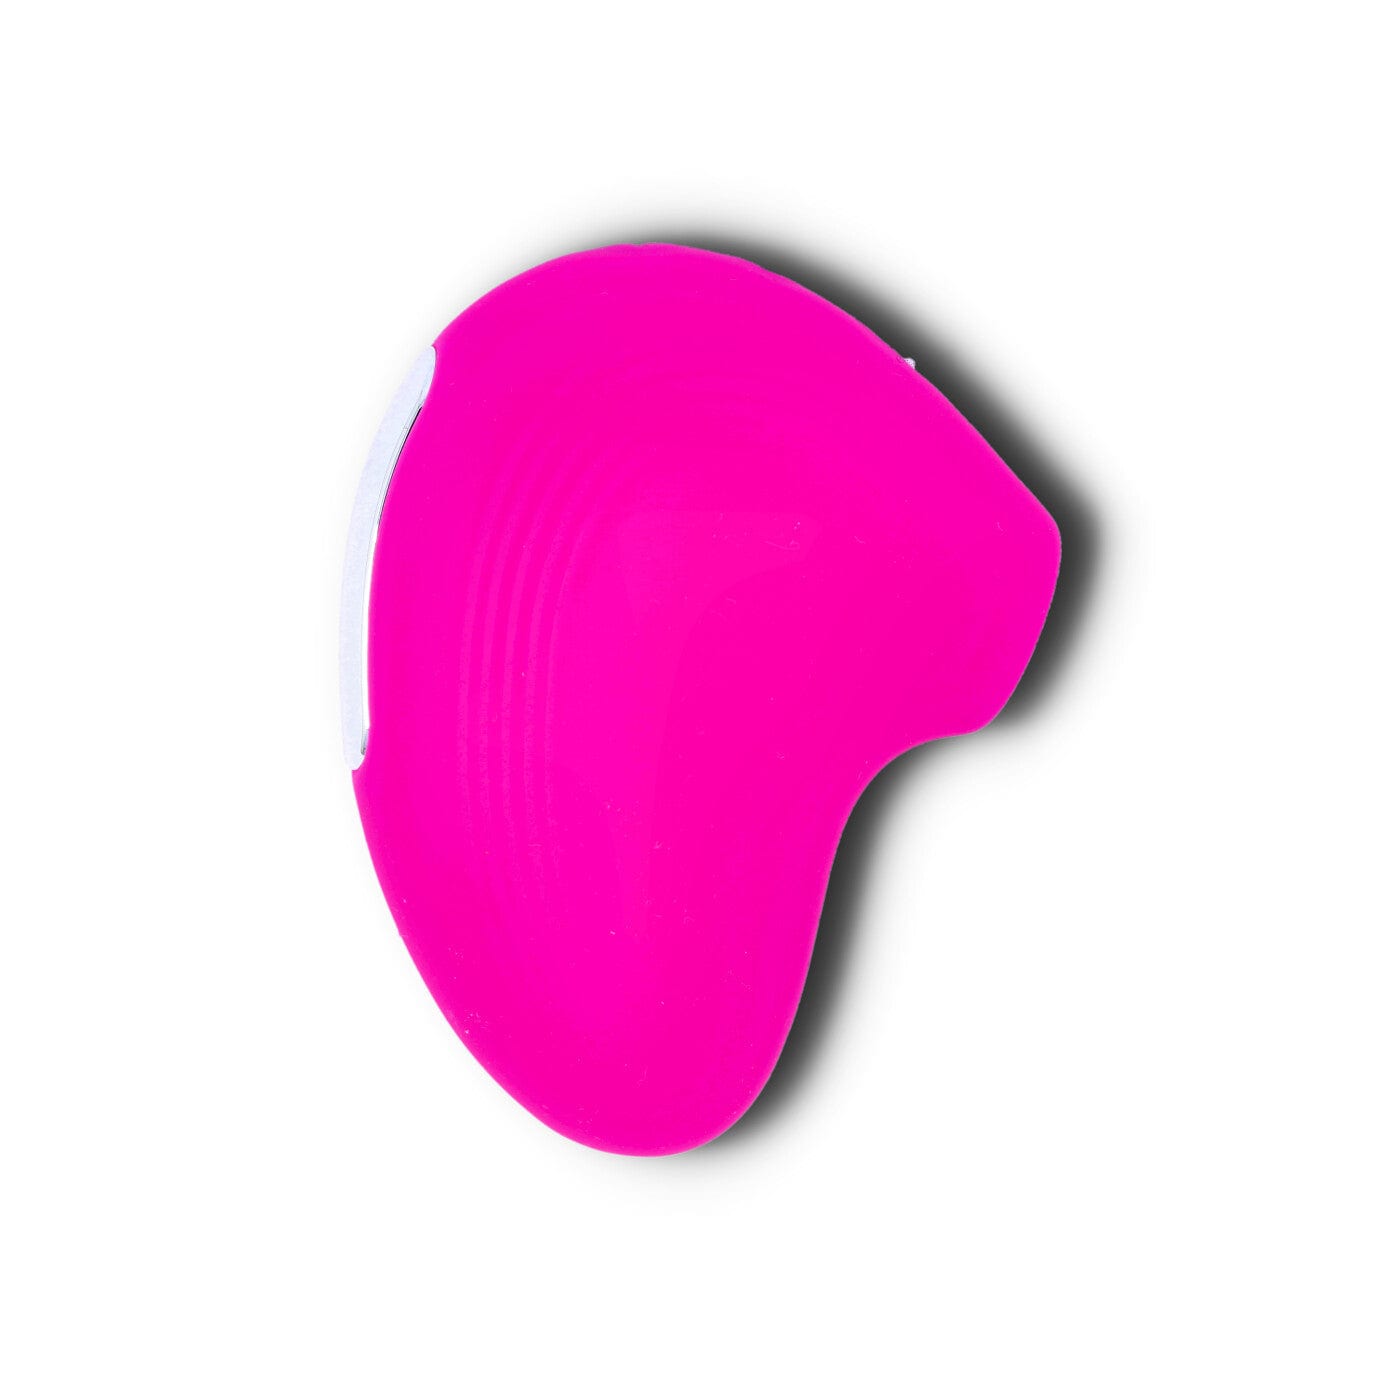 Handy fra peech - lille klitoris vakuum stimulator